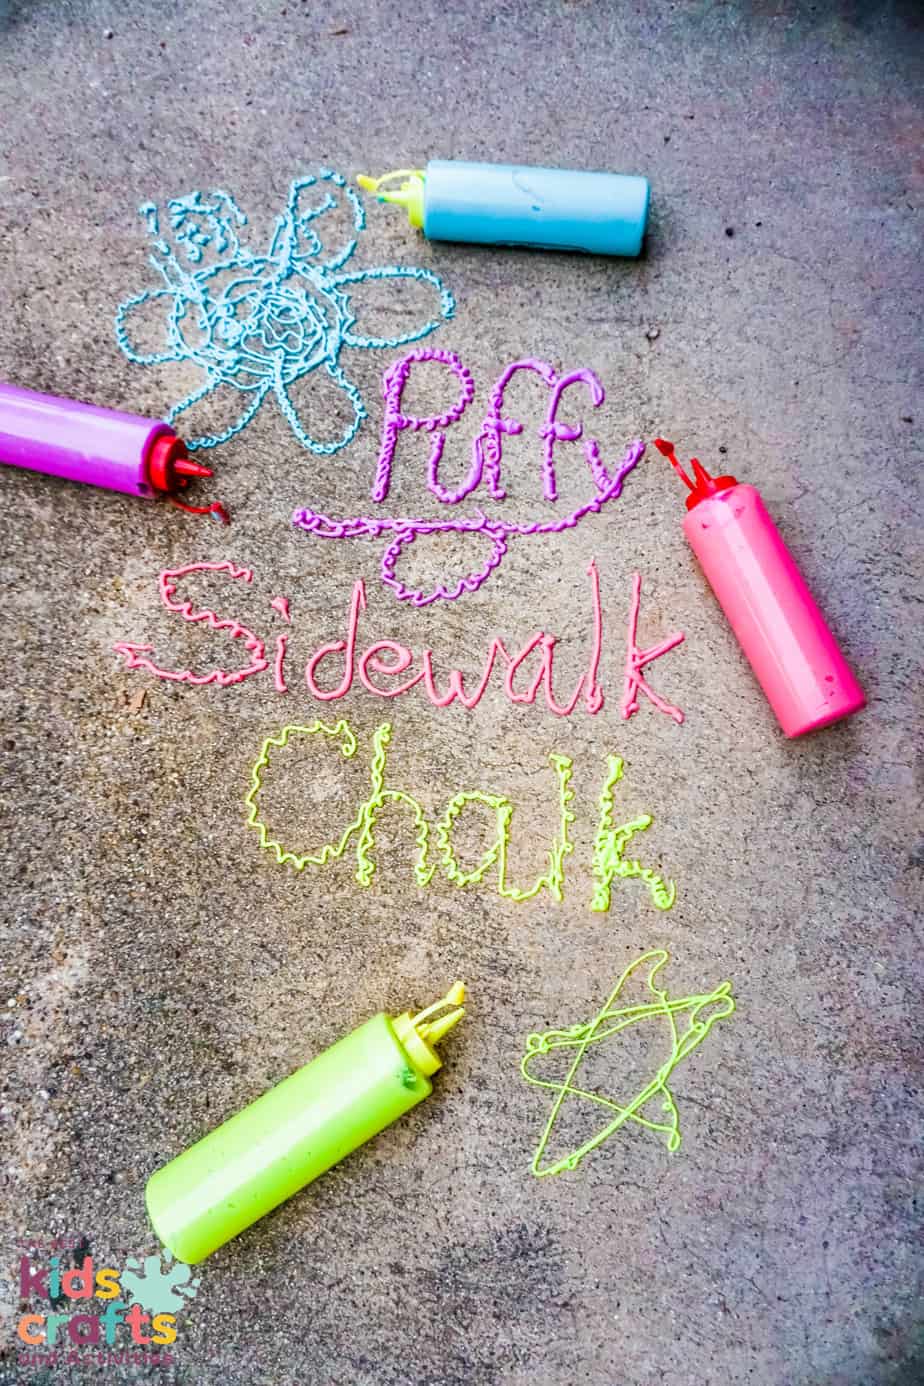 Puffy sidewalk chalk paint recipe